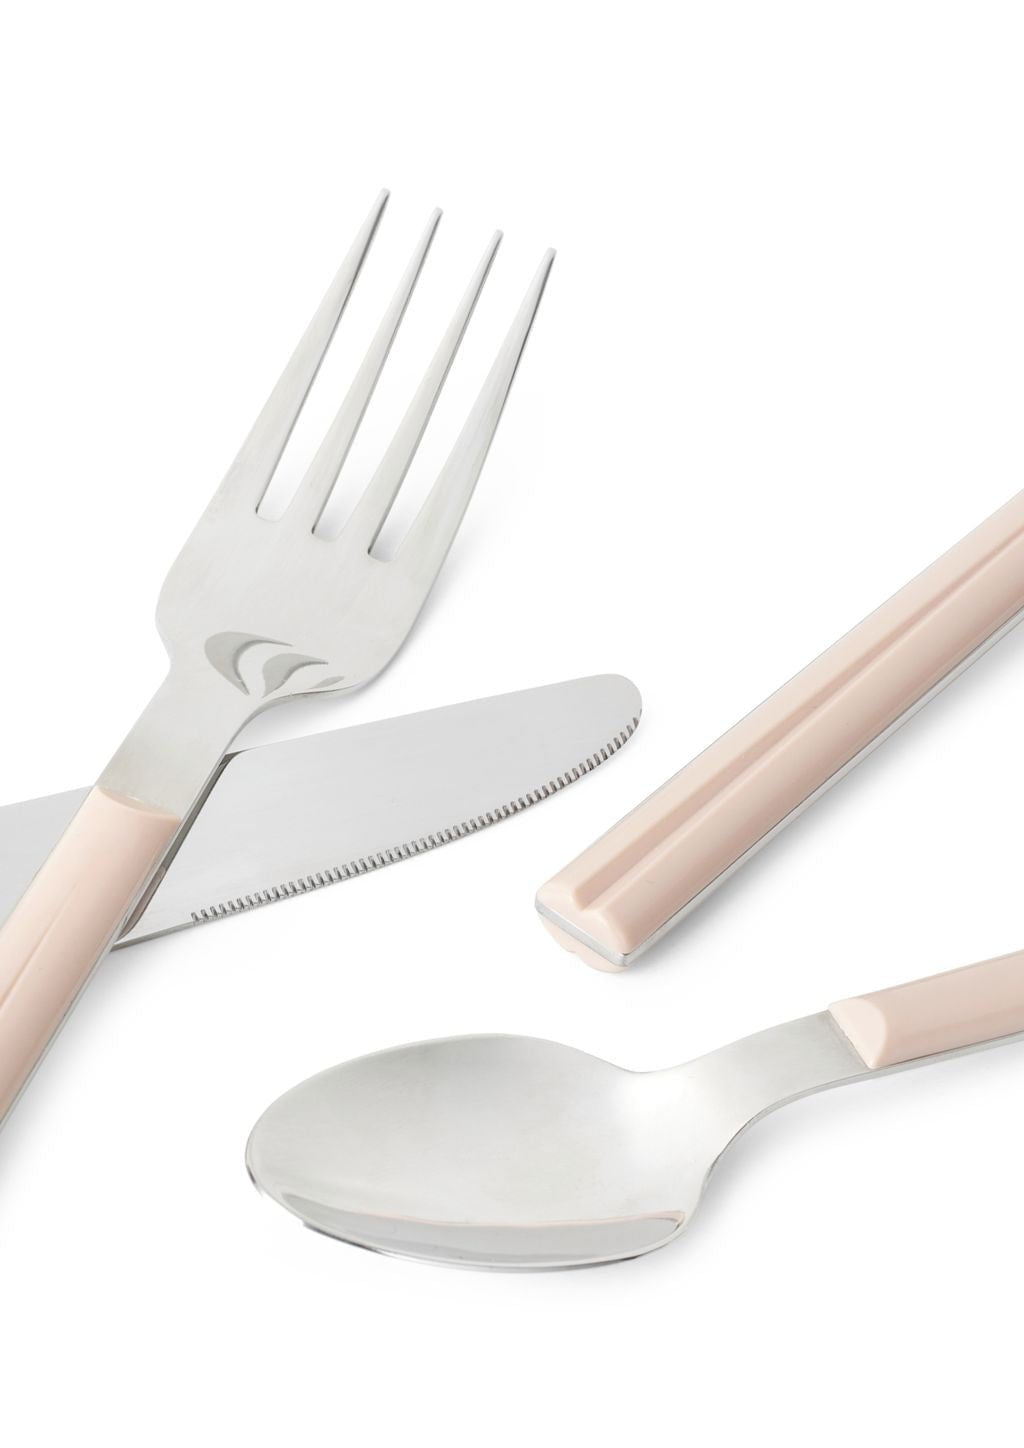 Rosendahl Gc Bistro Cutlery Set 16 Pieces, Blush